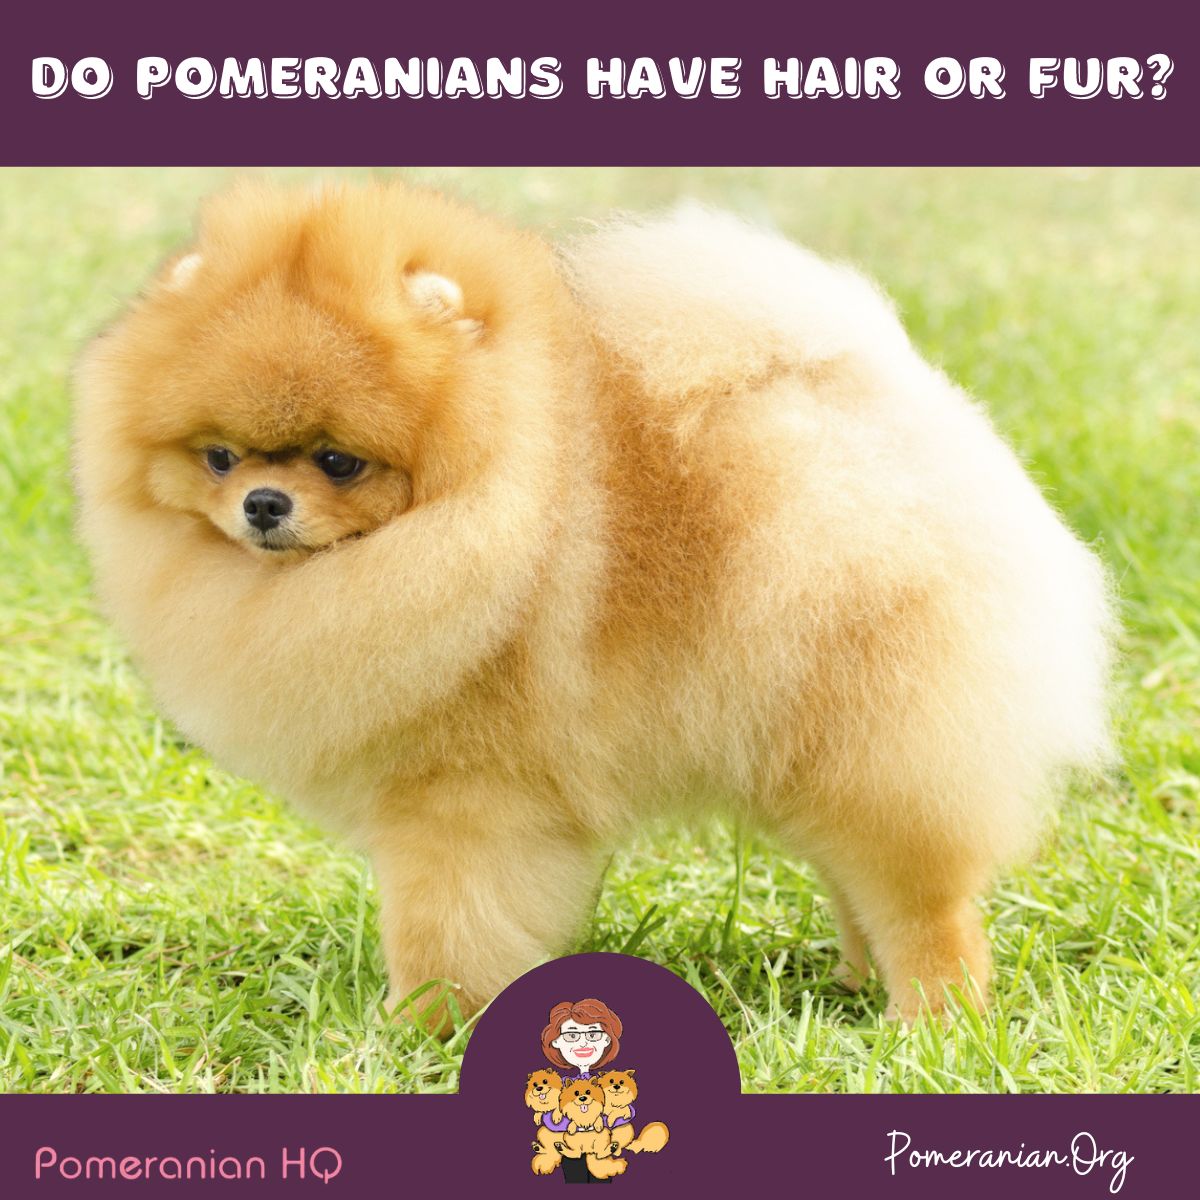 Do Pomeranians Have Hair or Fur?